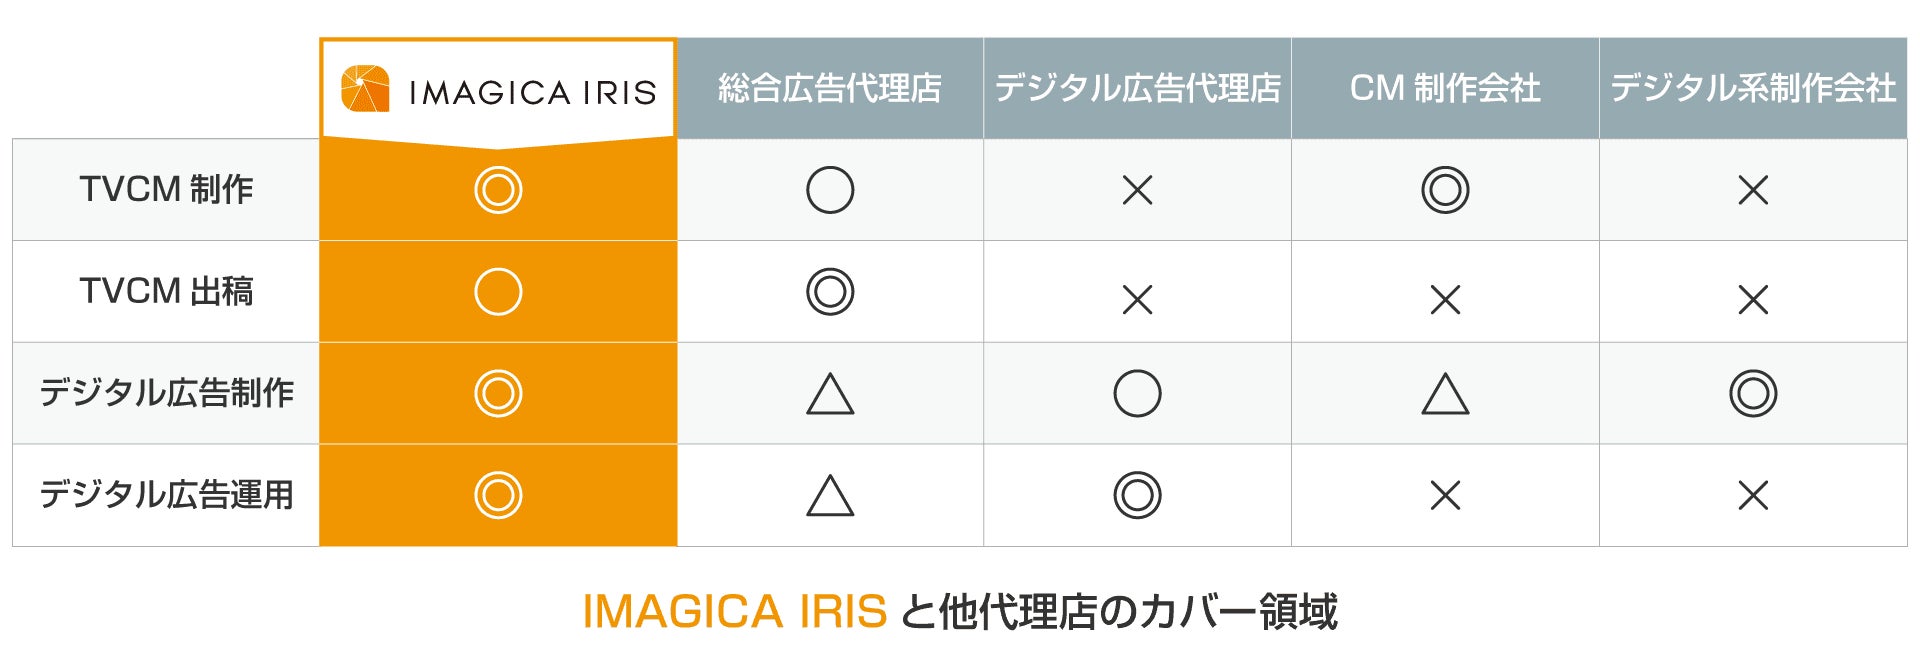 IMAGICA IRIS、シニア向けのプロモーションに特化した広告サービスパッケージ「シニア向けクロスメディアパッケージ」の提供を開始